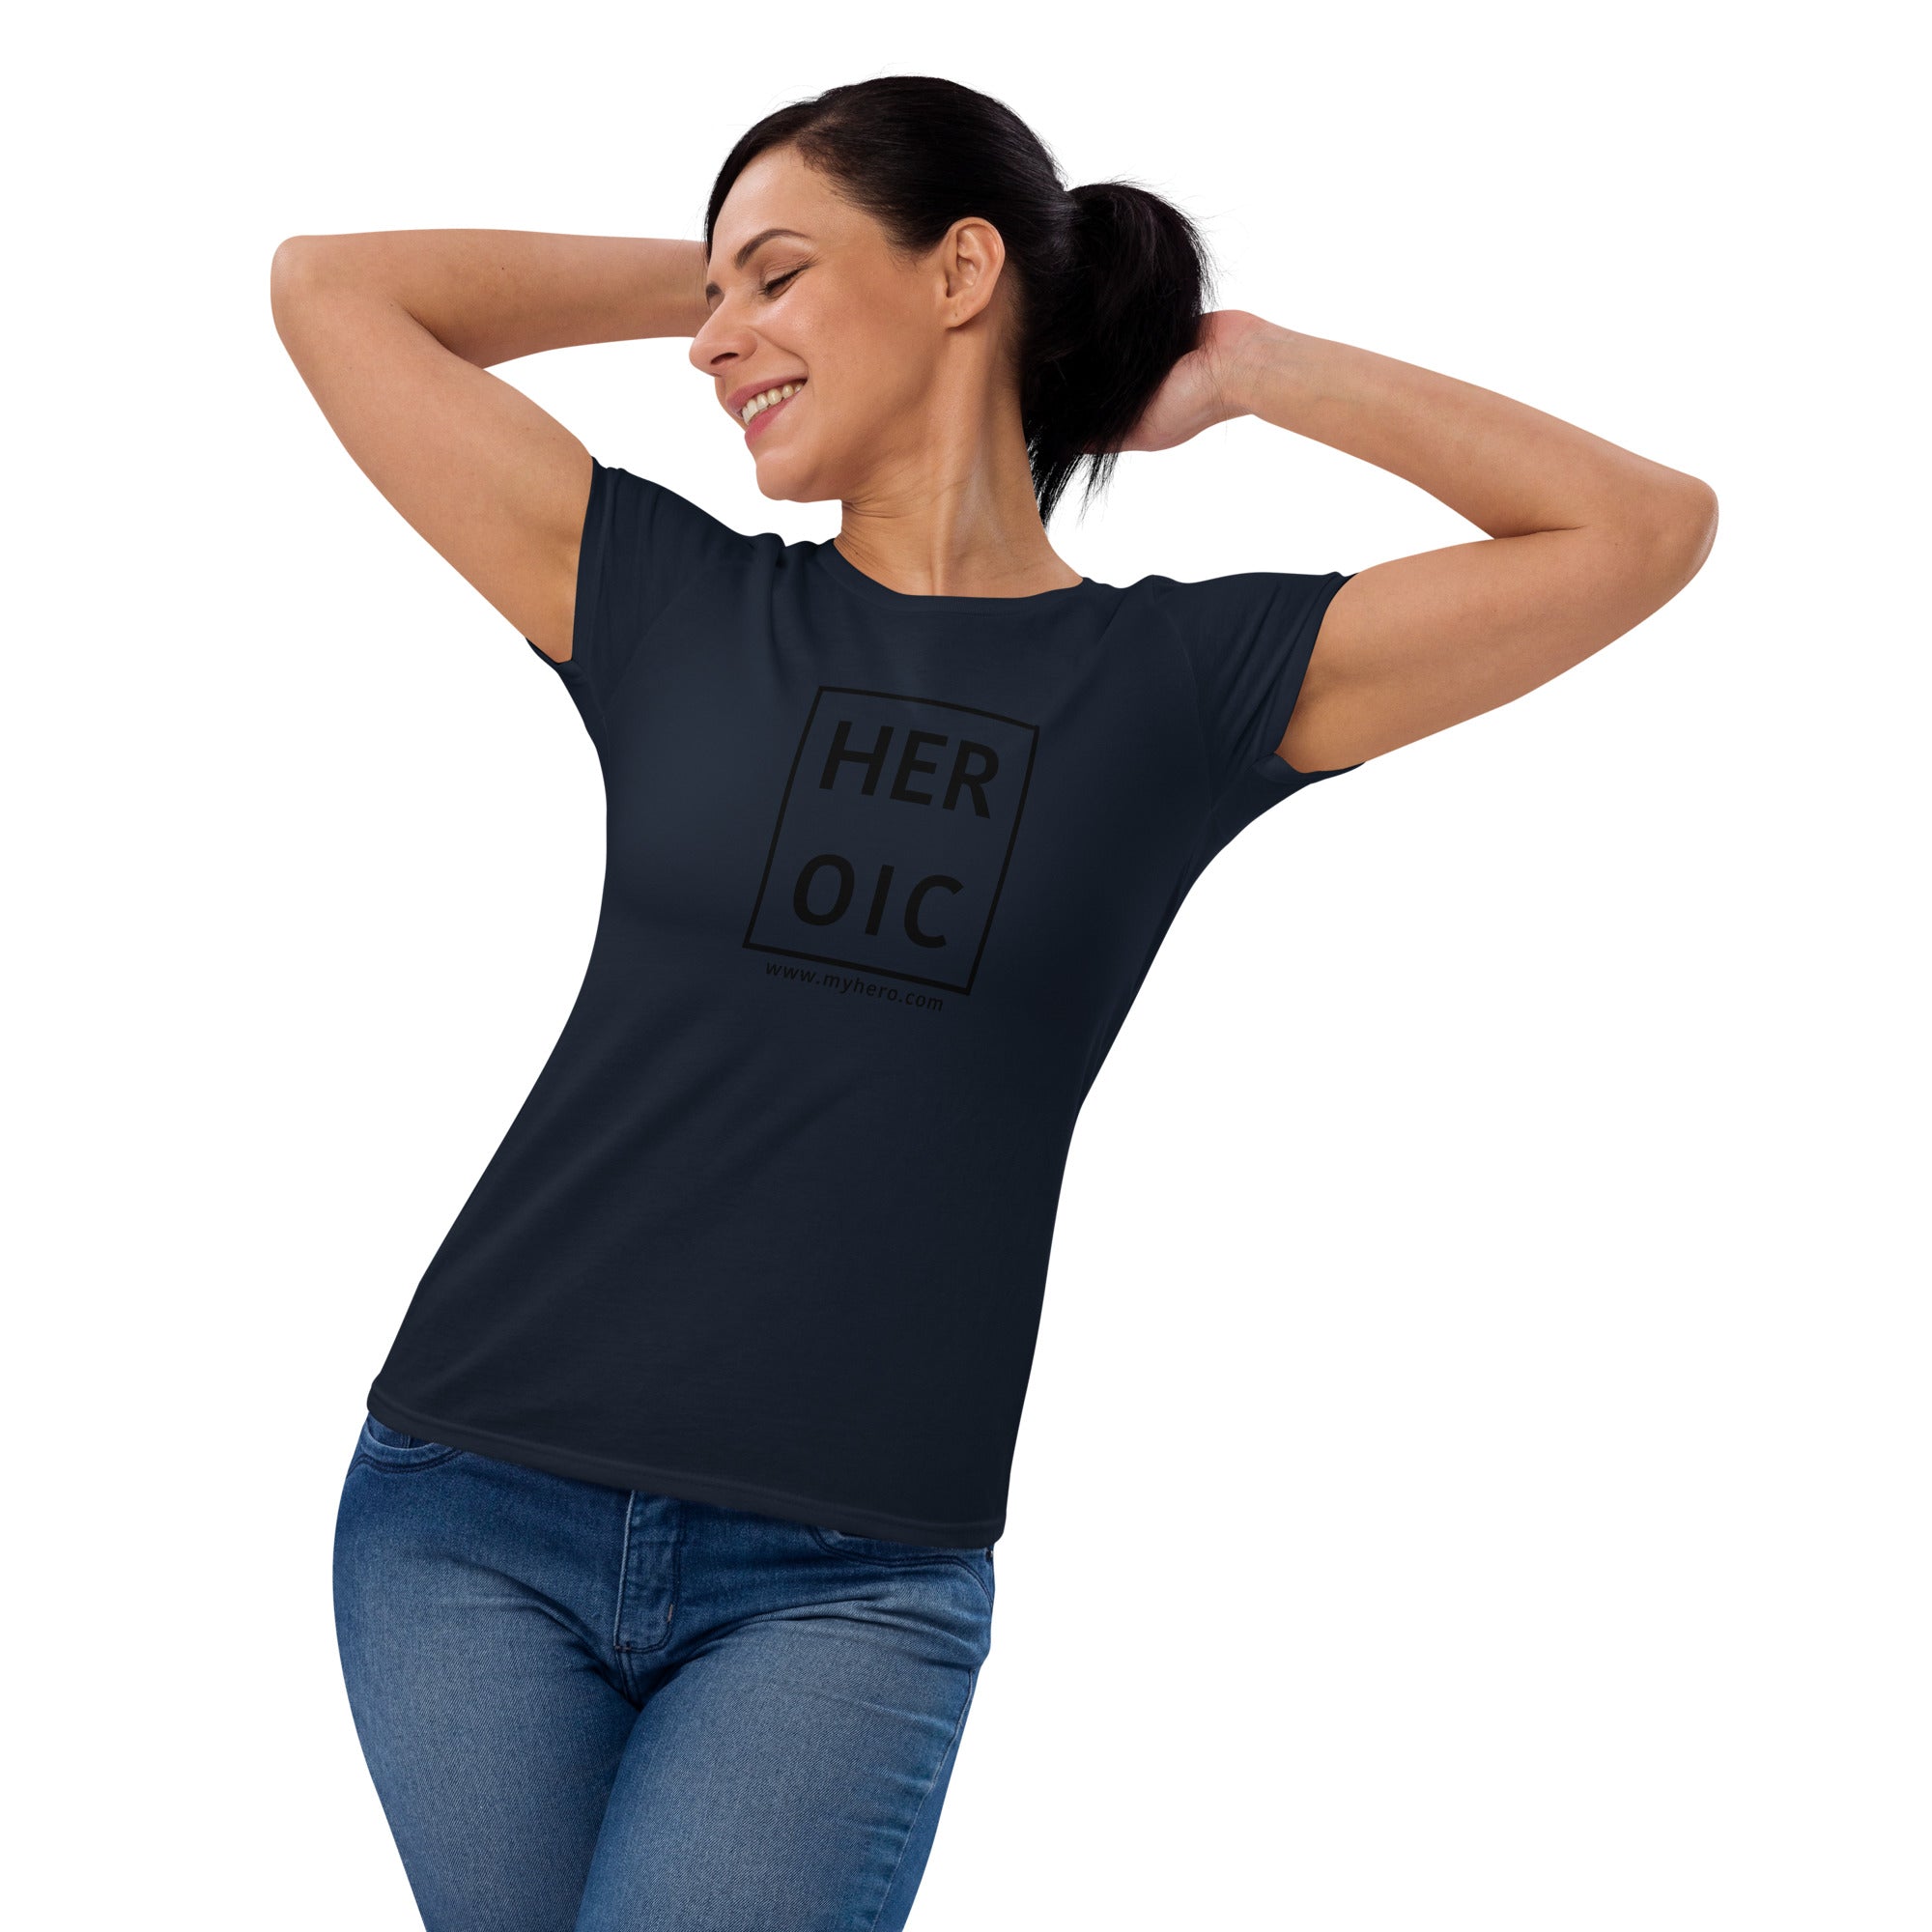 Heroic T-shirt (HER-OIC)